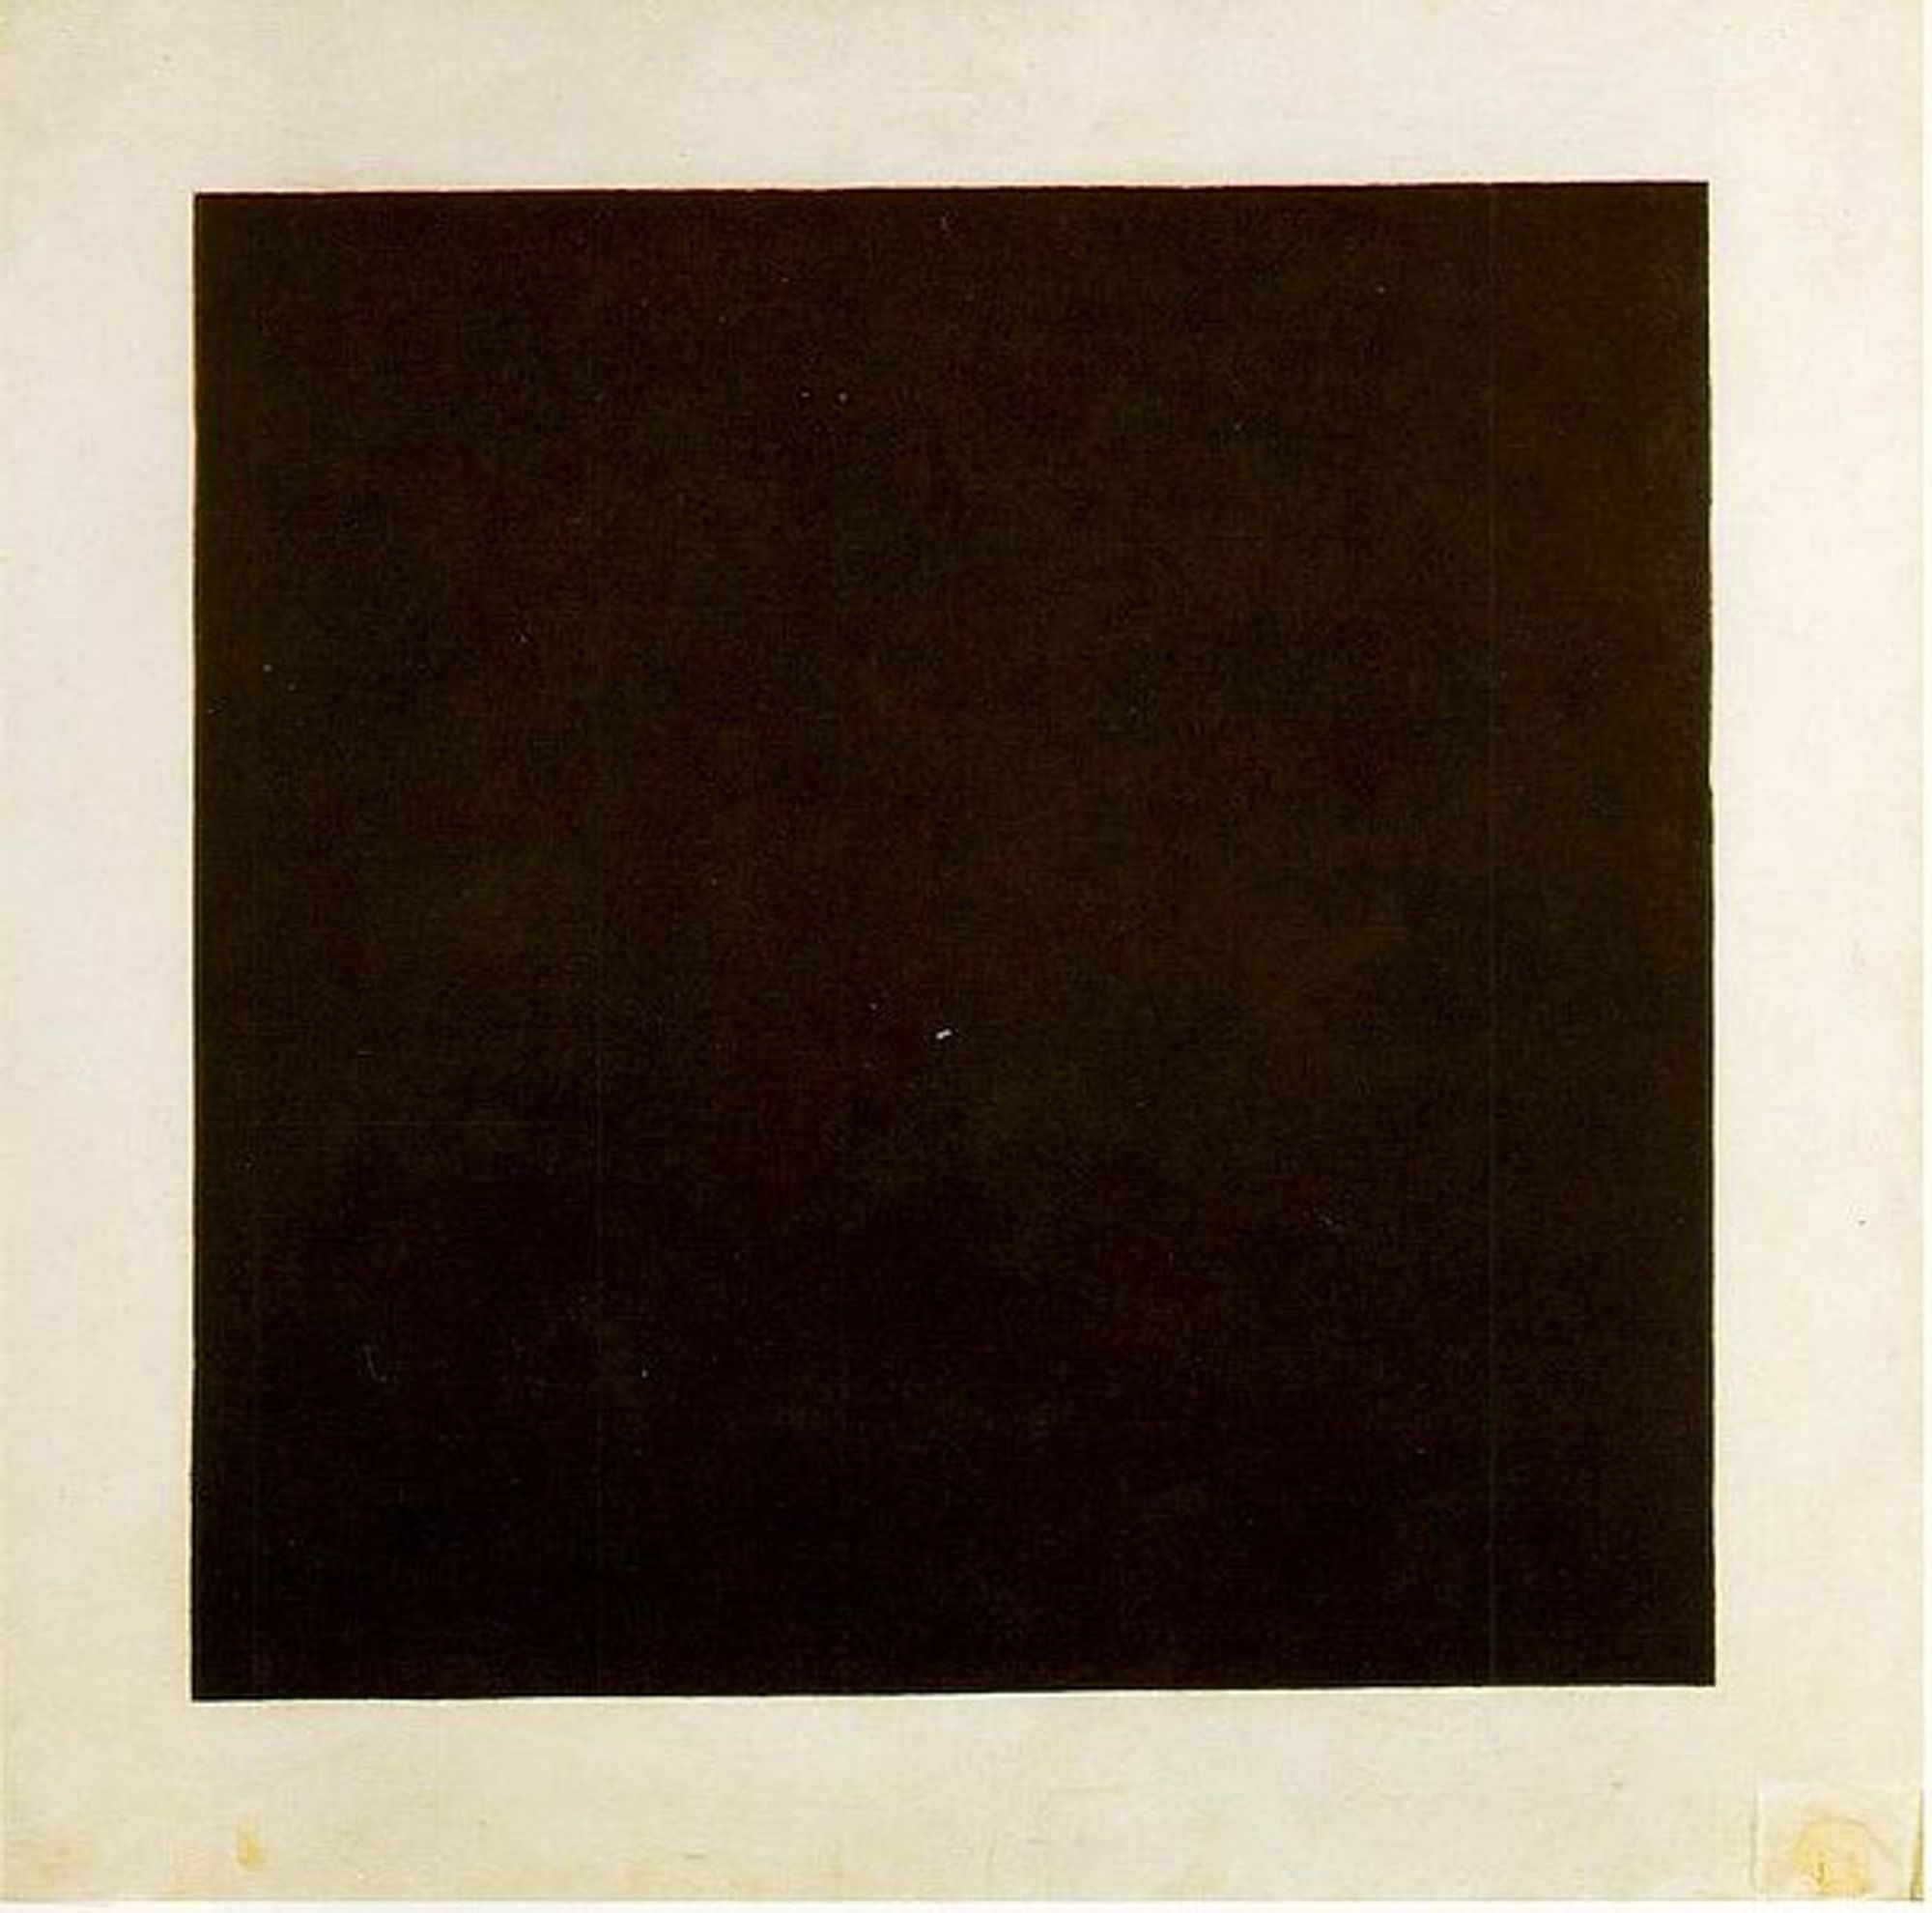 Kazimir Malevich: Black Square (1915)